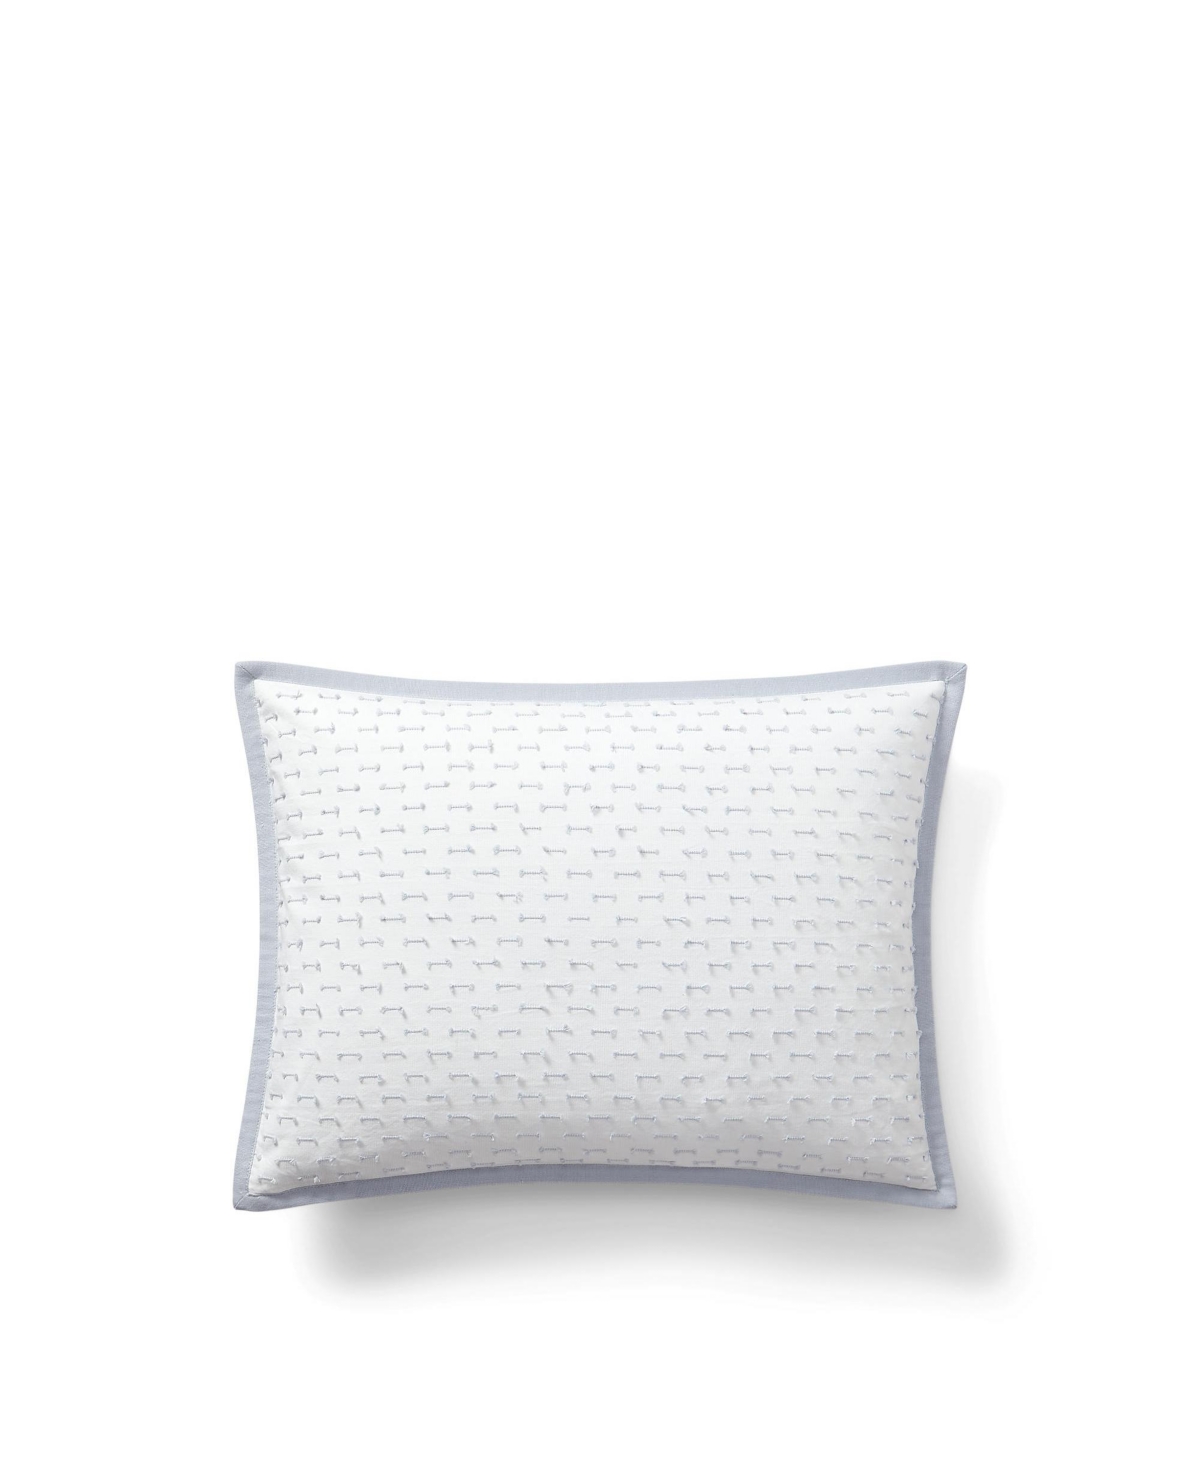 Lauren Ralph Lauren Bennett Fil Coupe Decorative Pillow, 15" X 20" Bedding In Multi